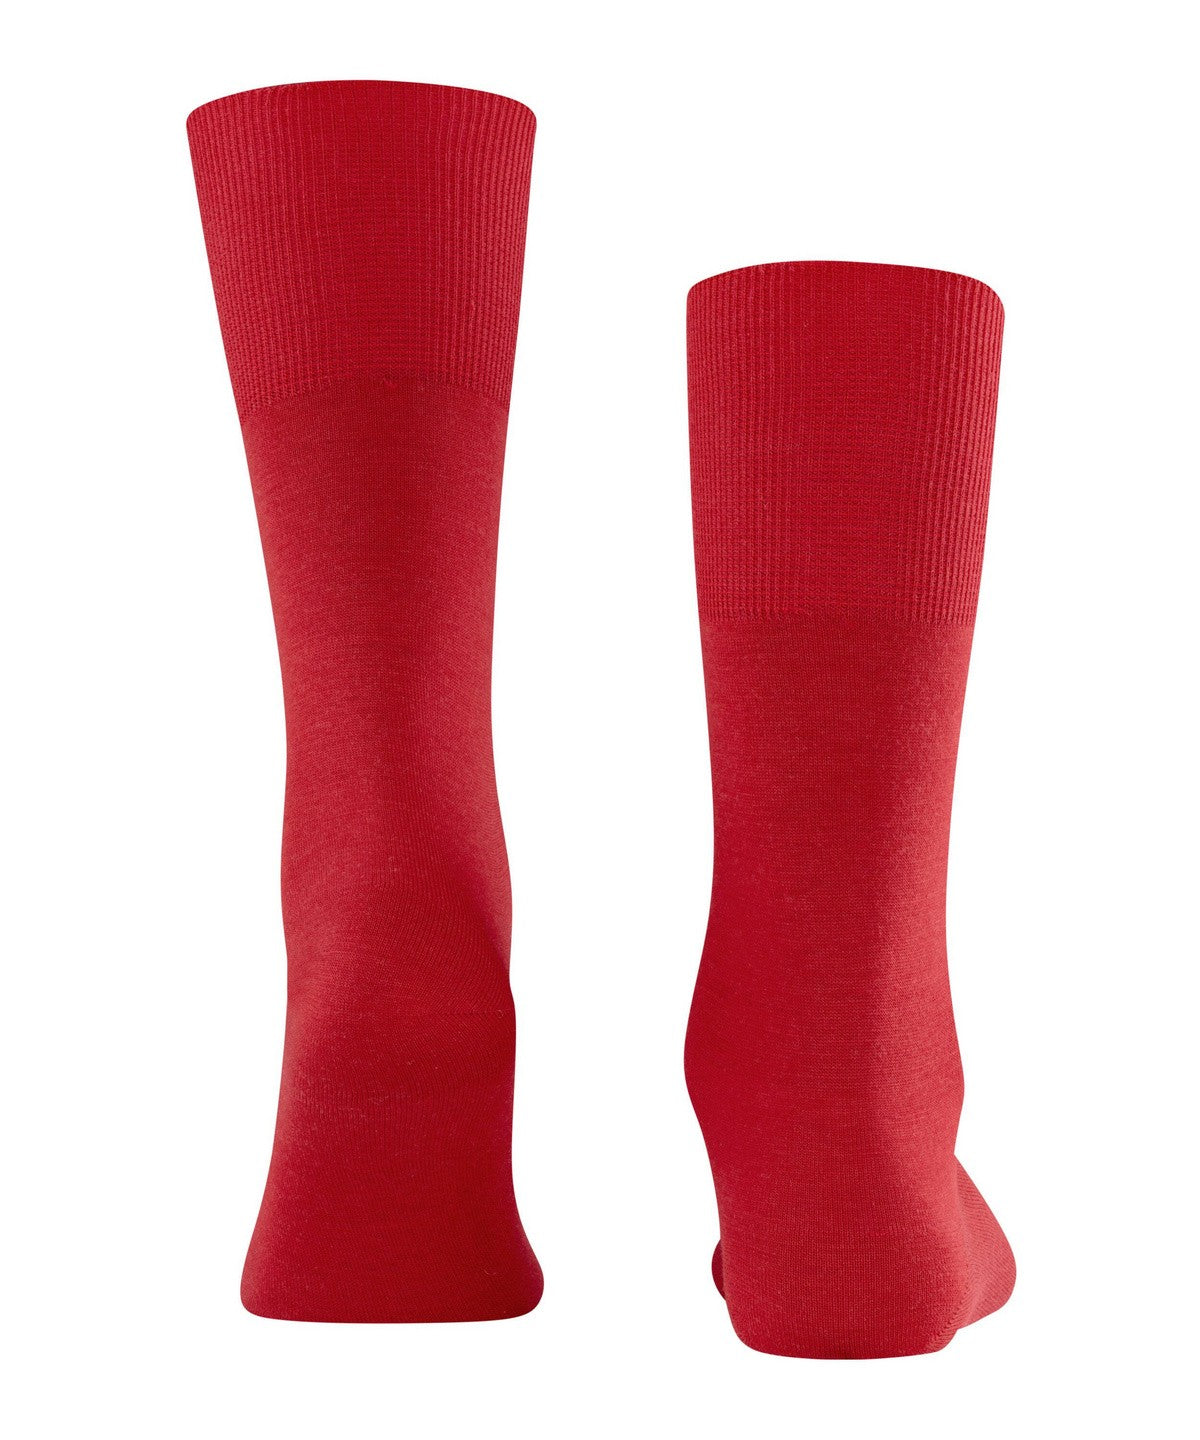 Falke Airport Wool Cotton Blend Socks Red